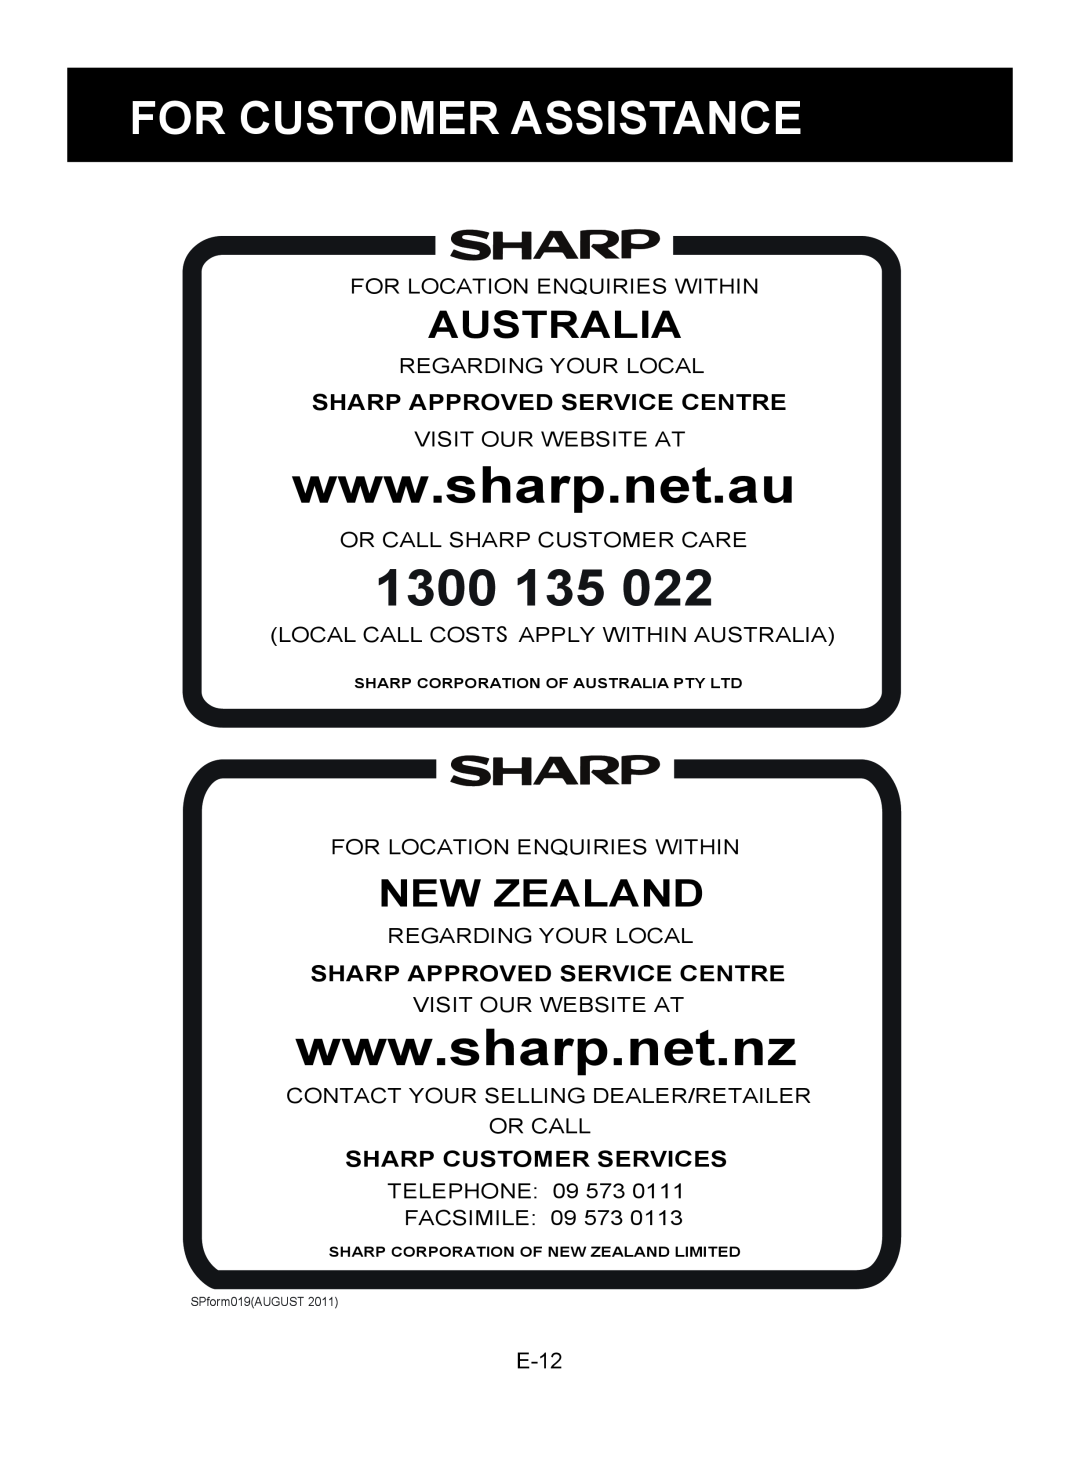 Sharp FU-A80J Sharp Approved Service Centre, Sharp Customer Services, E-12, 1300, For Customer Assistance, Australia 